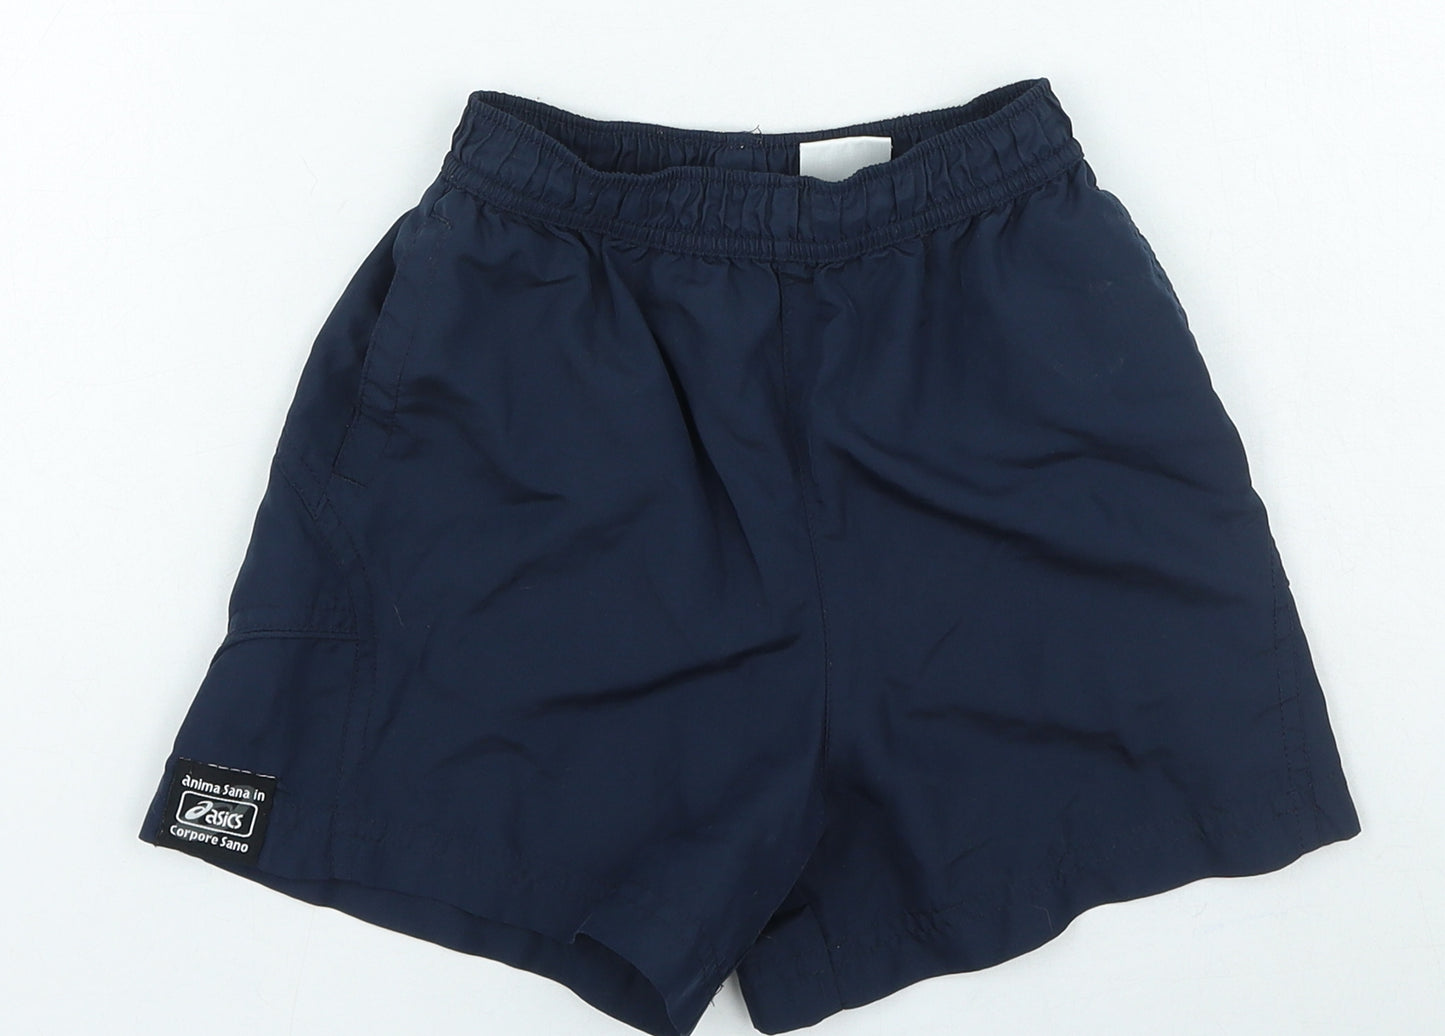 ASICS Boys Blue Polyester Sweat Shorts Size 2-3 Years Regular